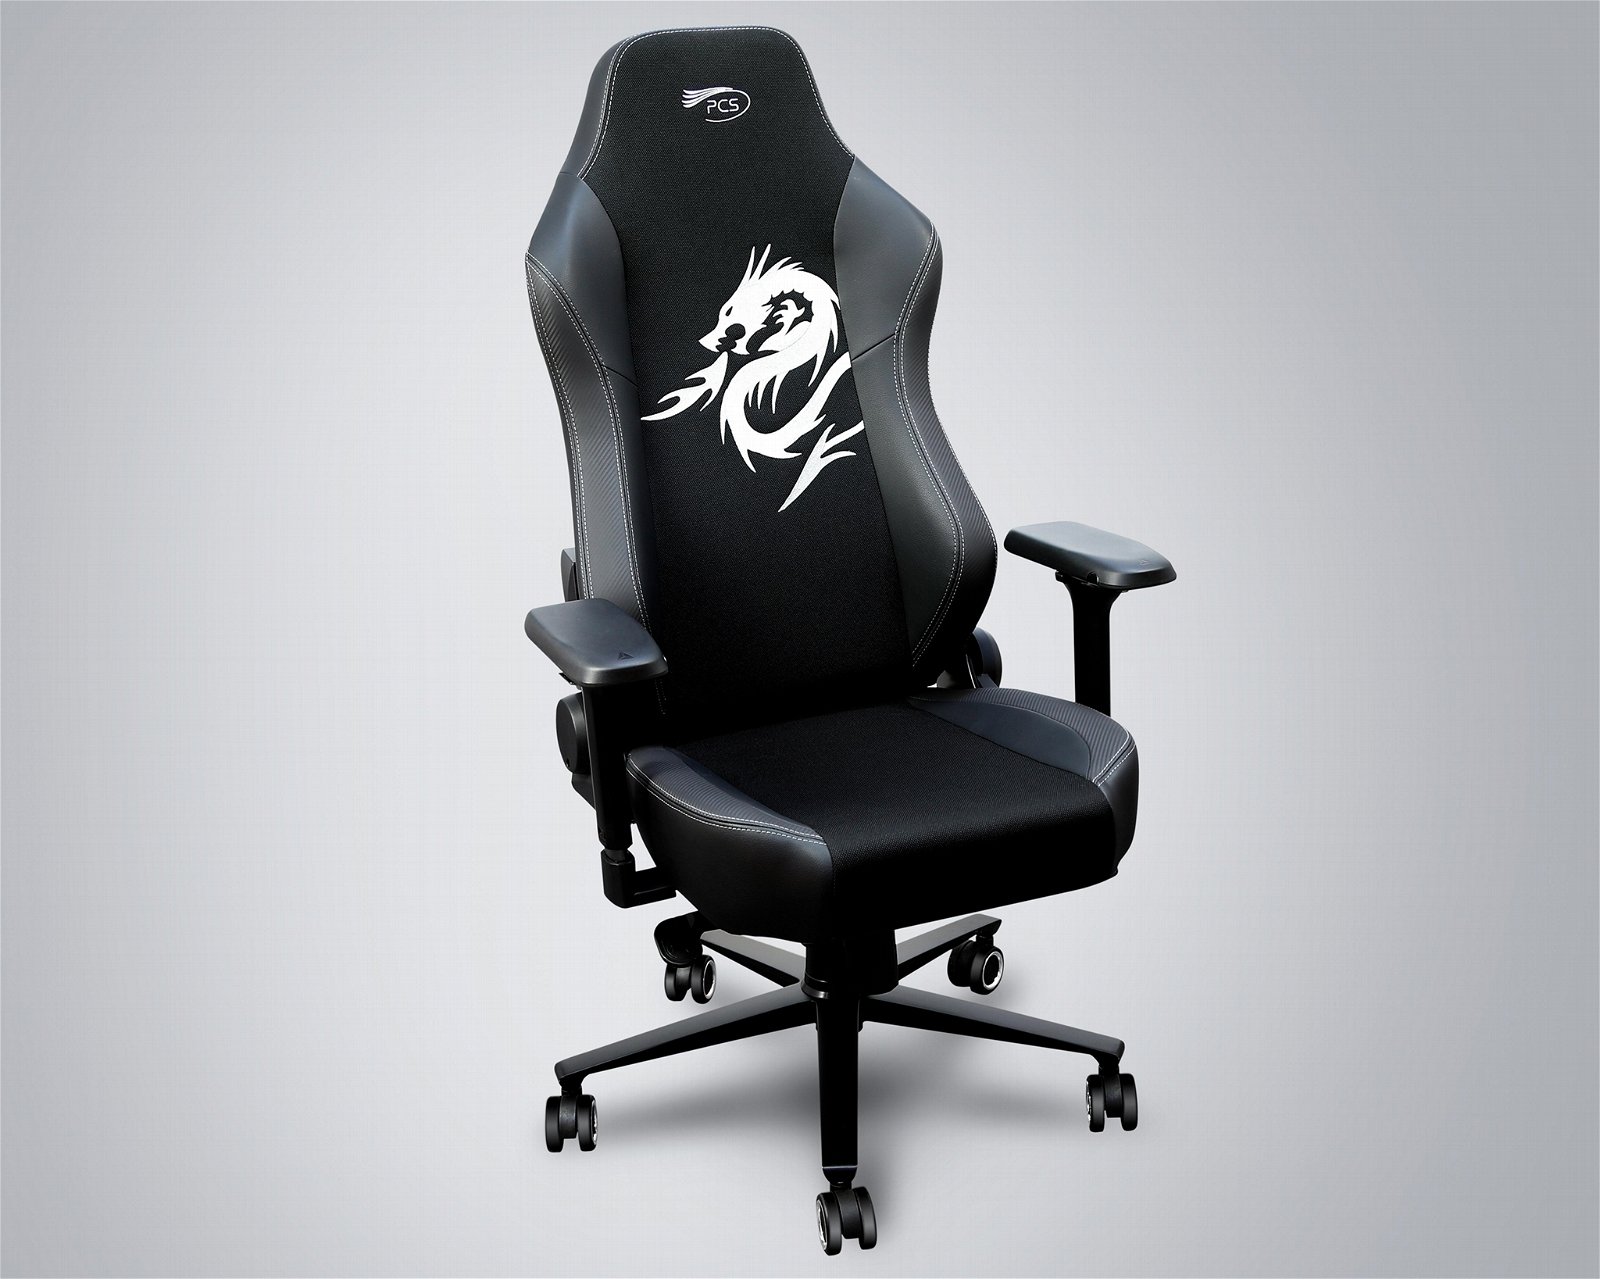 Pcs gaming chair 2